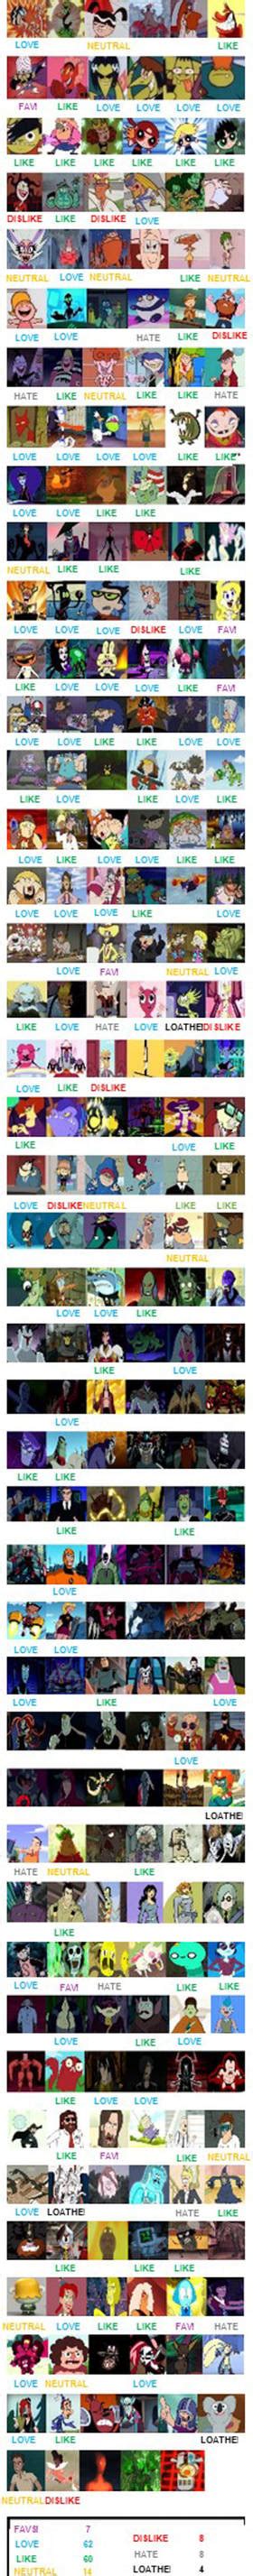 Cartoon Network Antagonist Character Scorecard By Aviytph On Deviantart